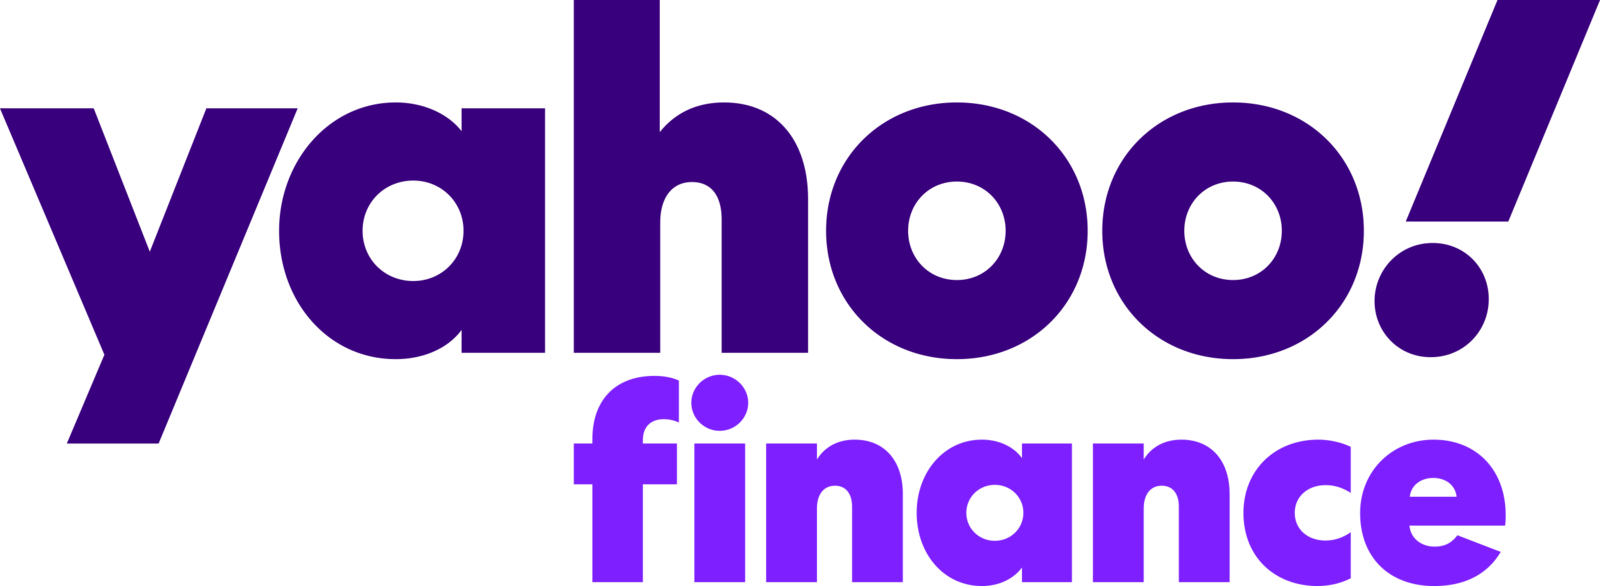 Yahoo!_Finance